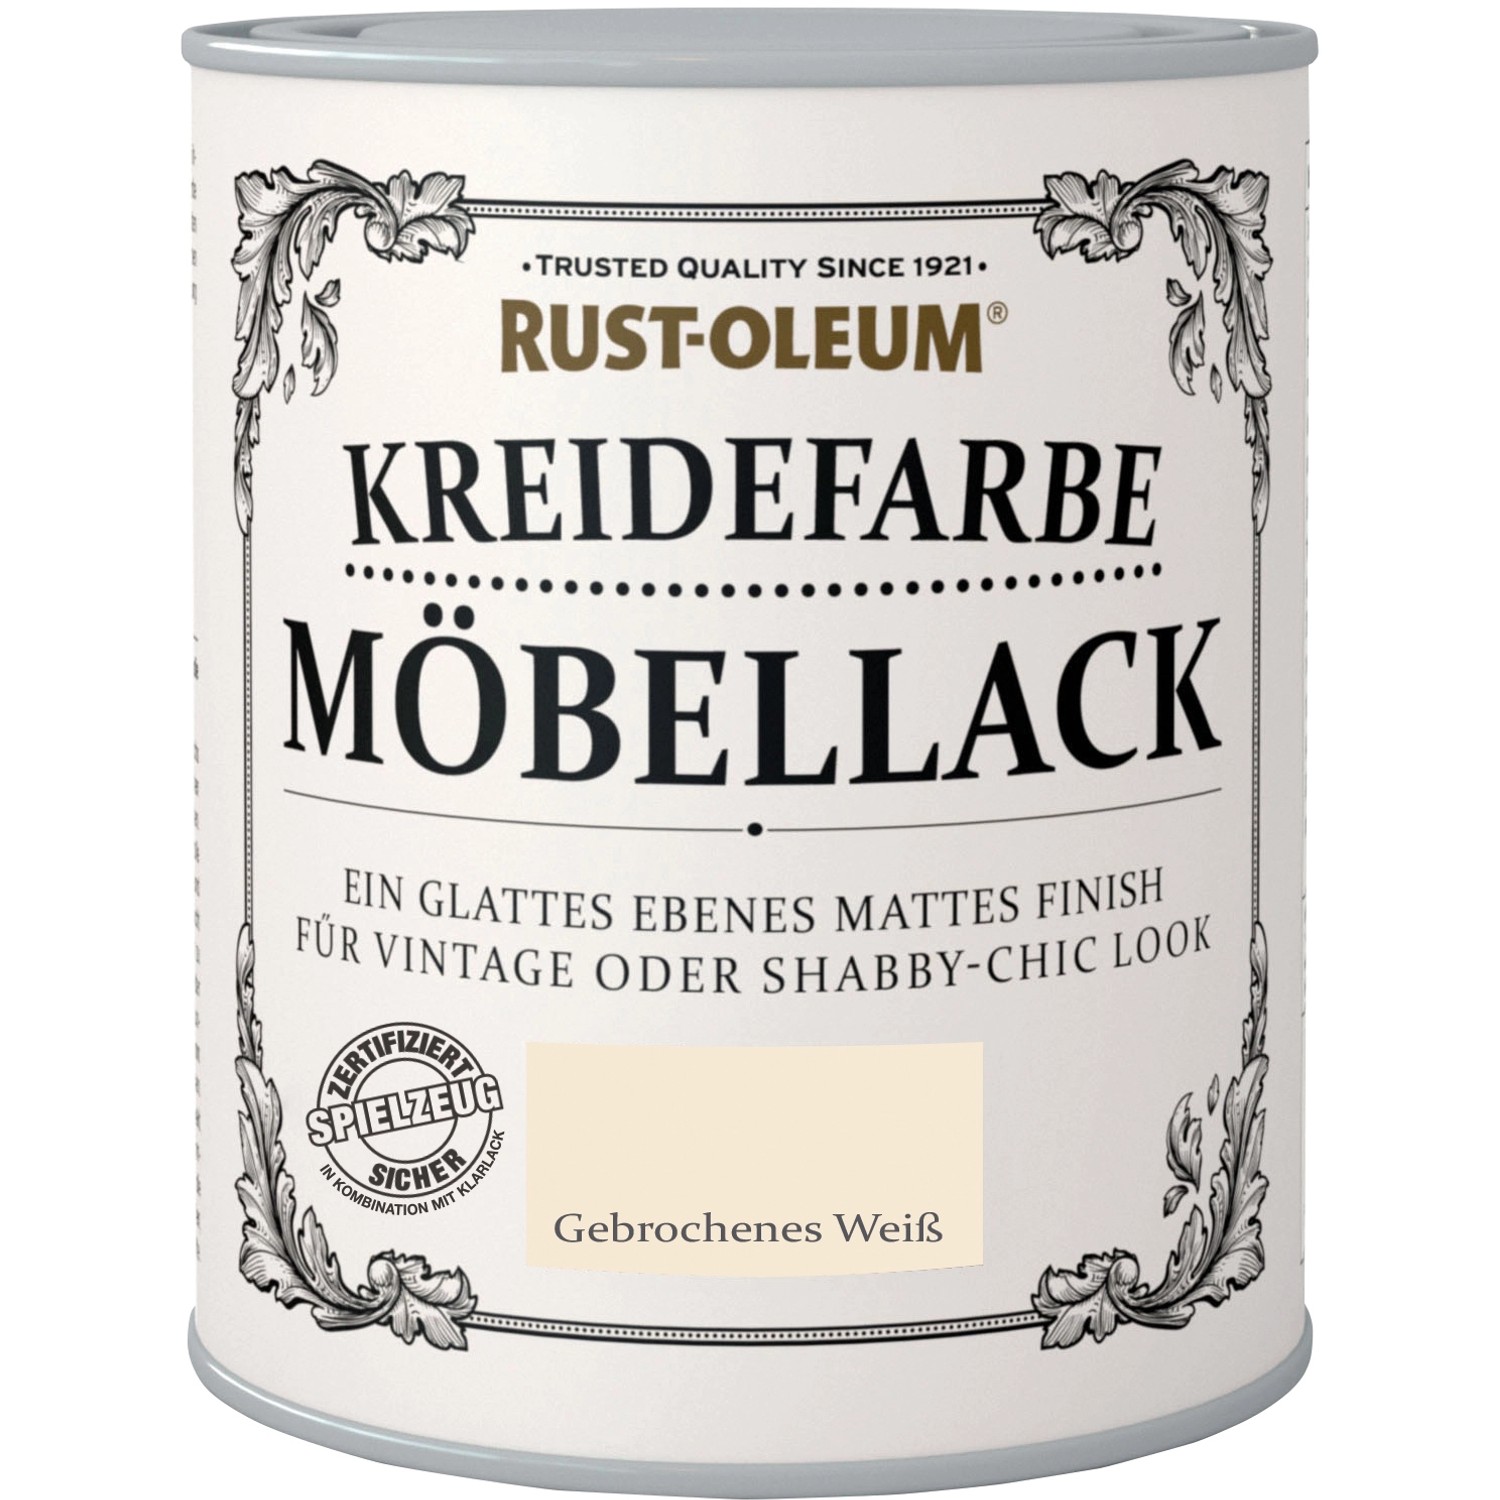 Rust-Oleum Kreidefarbe Möbellack Gebrochenes weiß Matt 750 ml